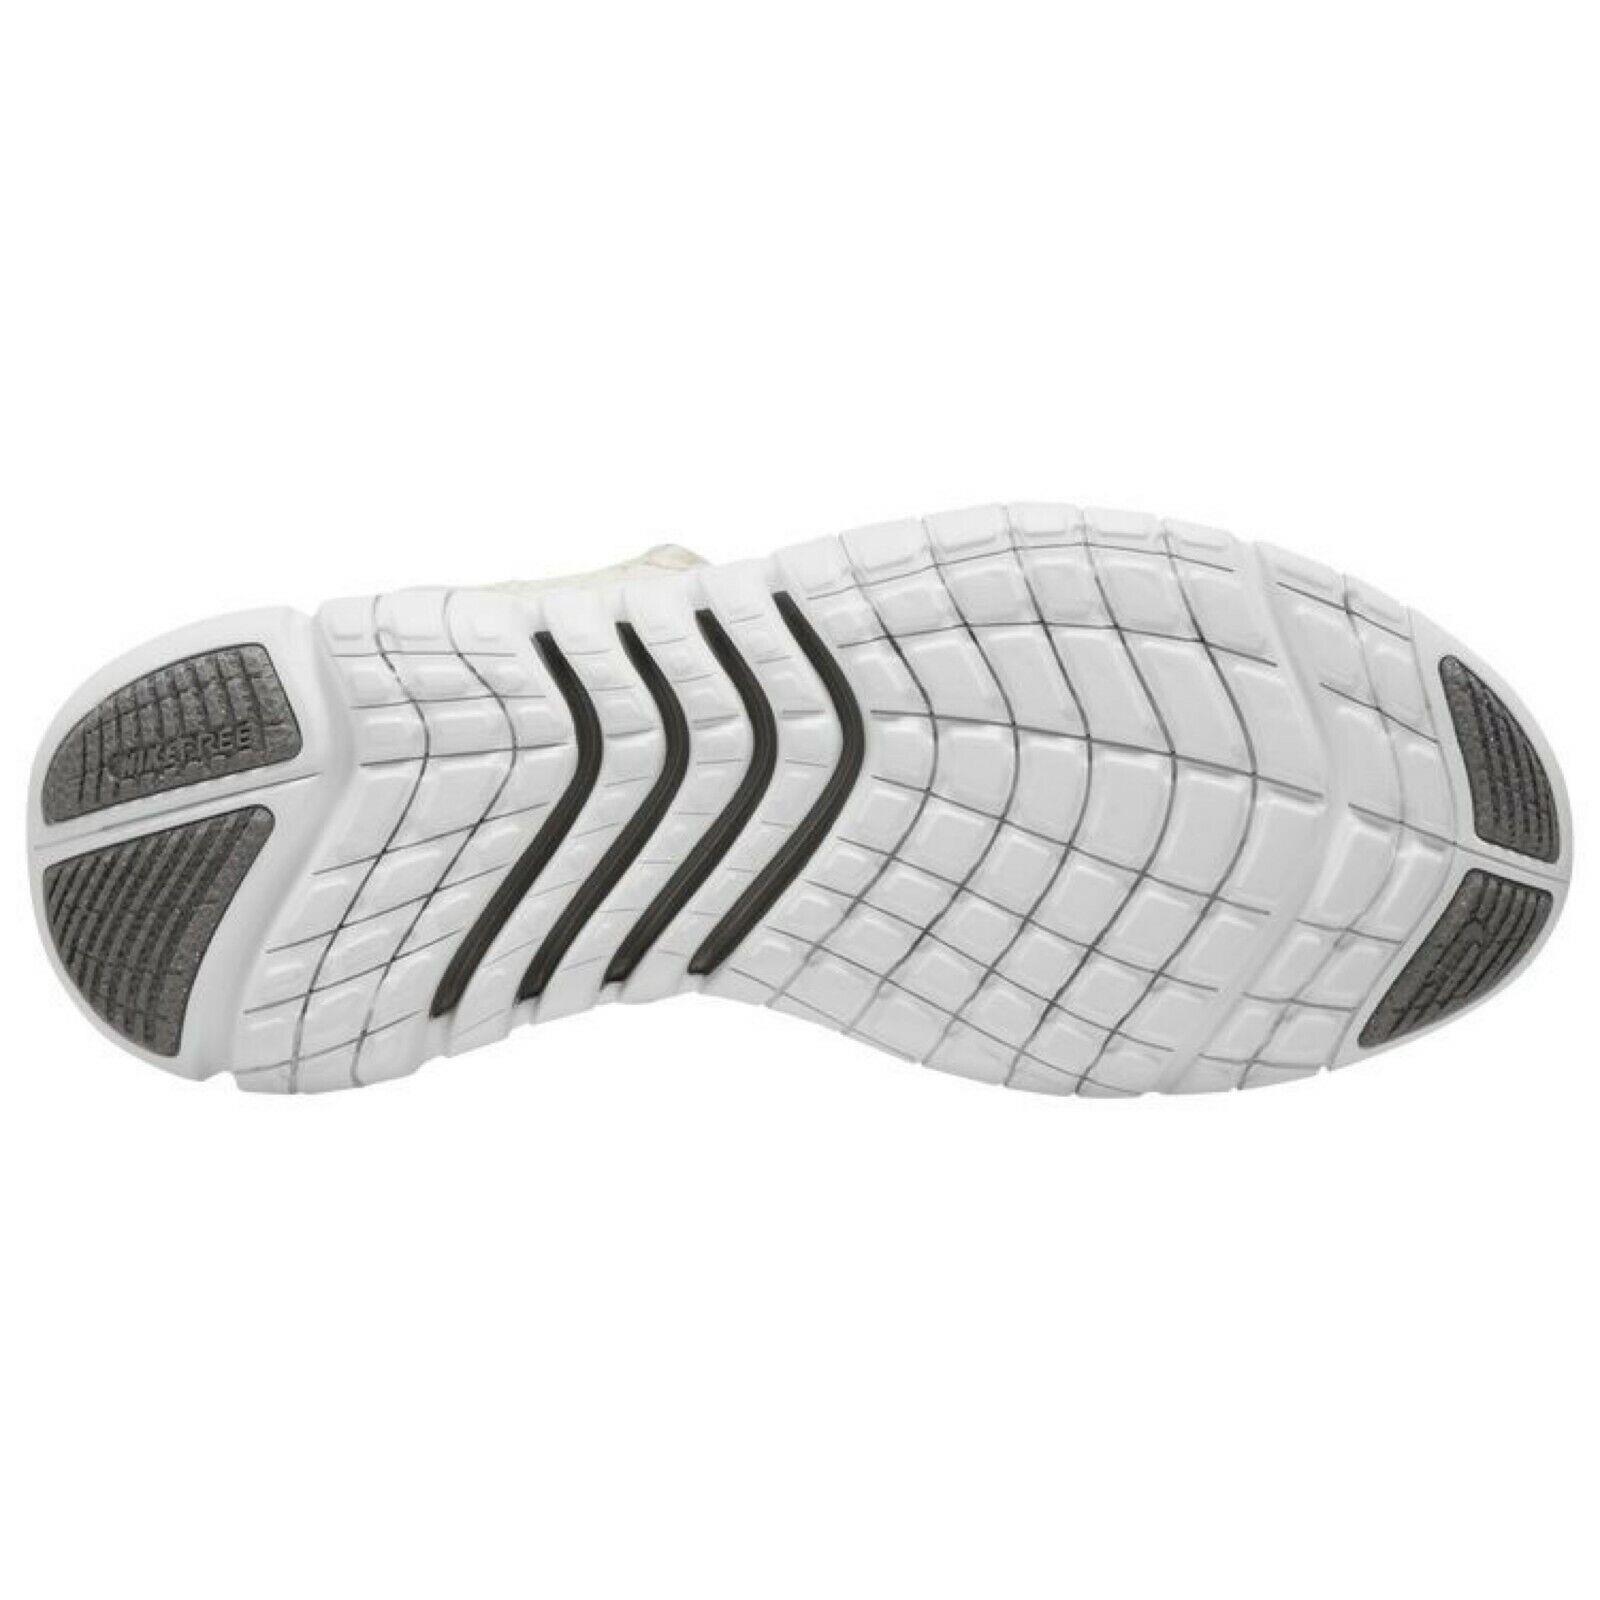 Nike shoes Free Run - Beige , Tan/Gray Manufacturer 2